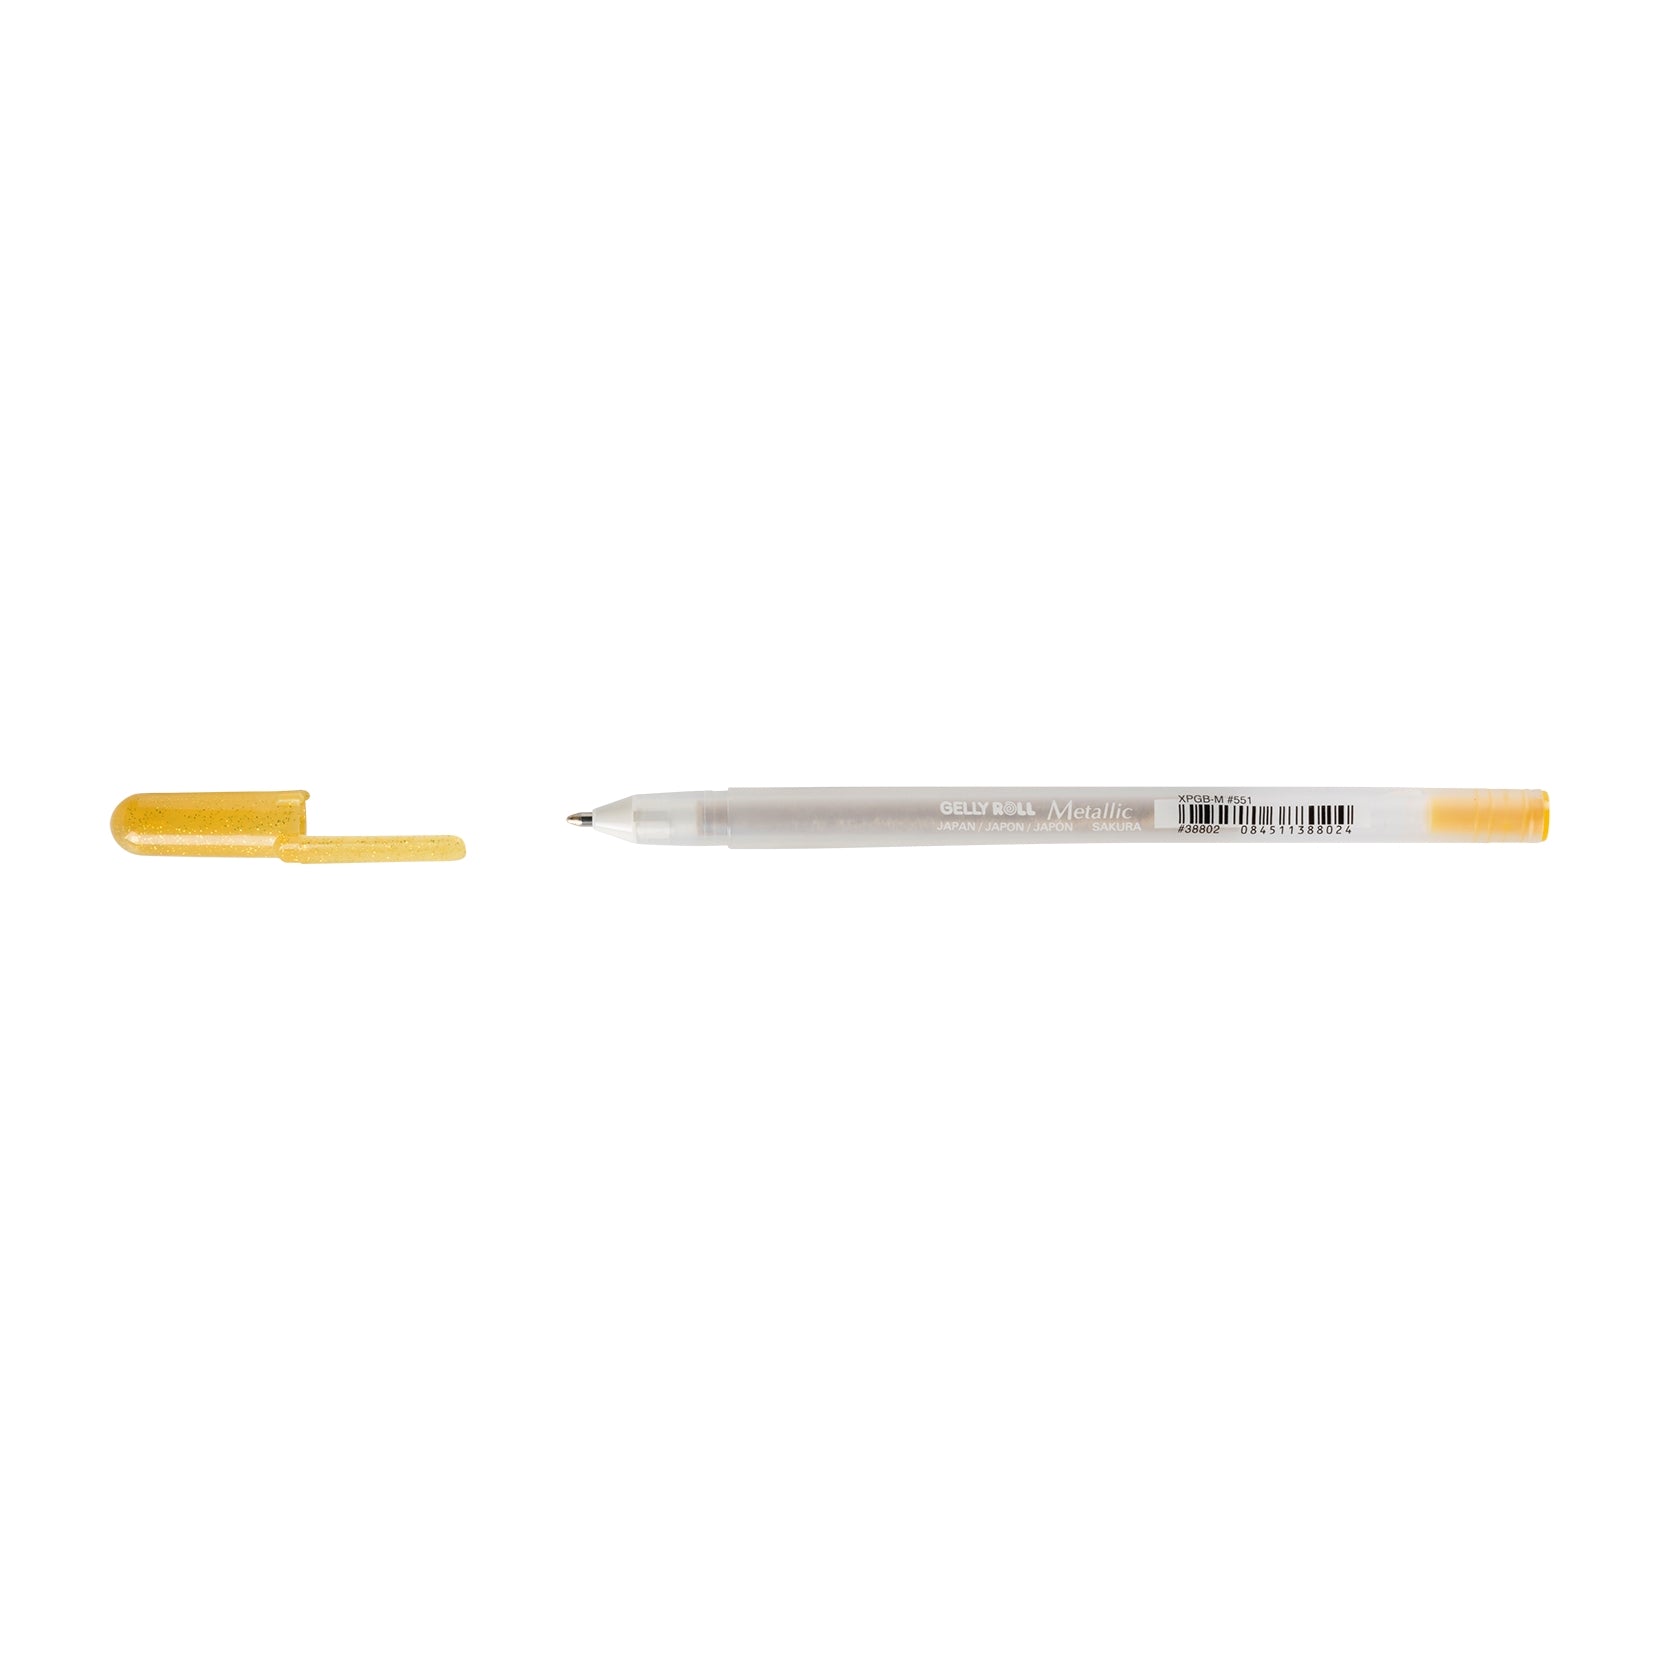 Pentel Milky Pop Pastel Gel Pens .8Mm 2/Pkg-White Ink